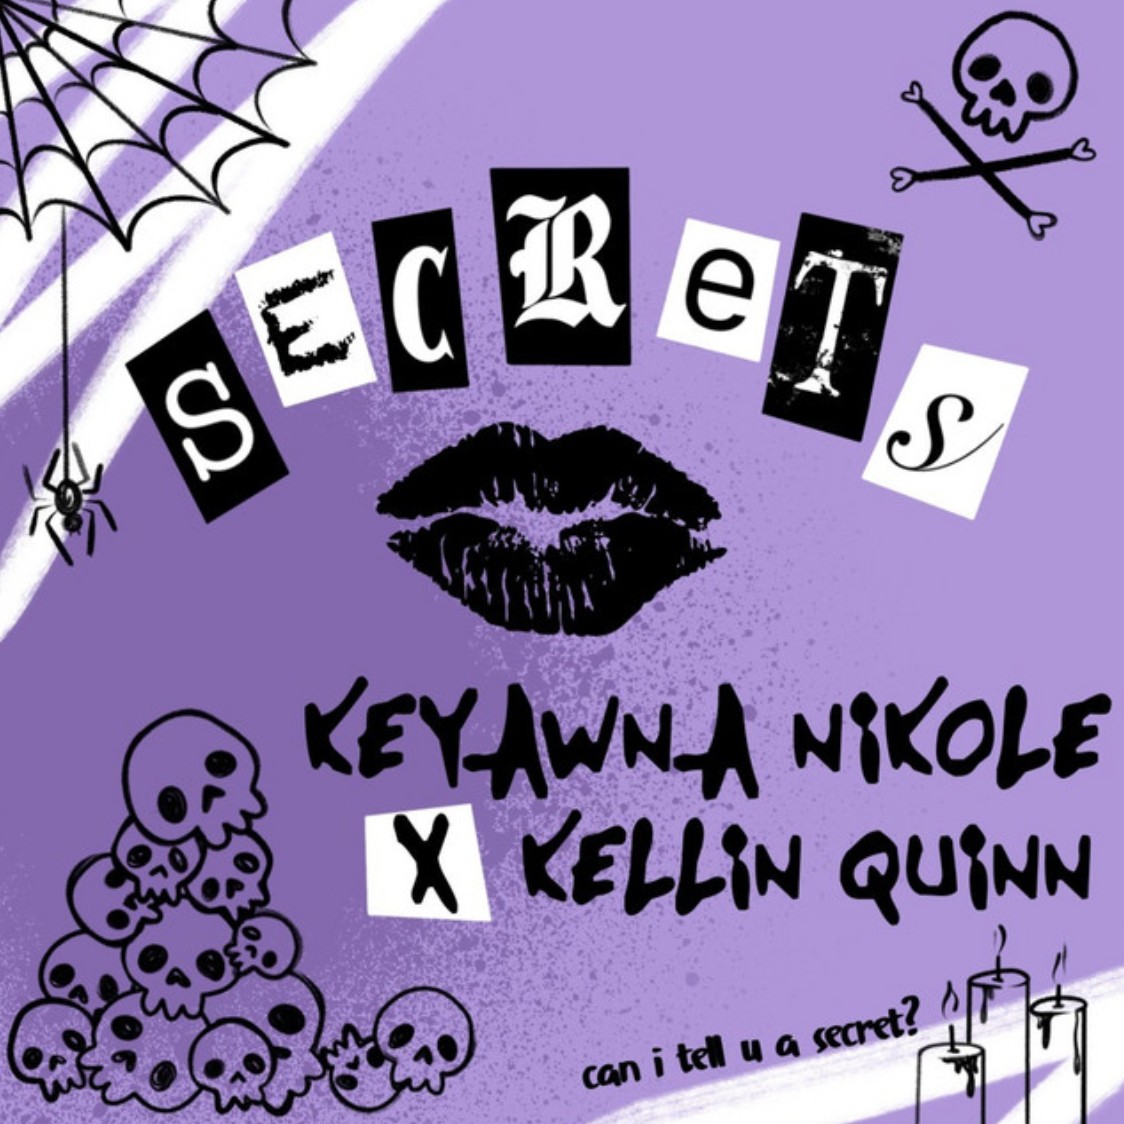 Keyawna Nikole feat. Kellin Quinn “Secrets” single artwork